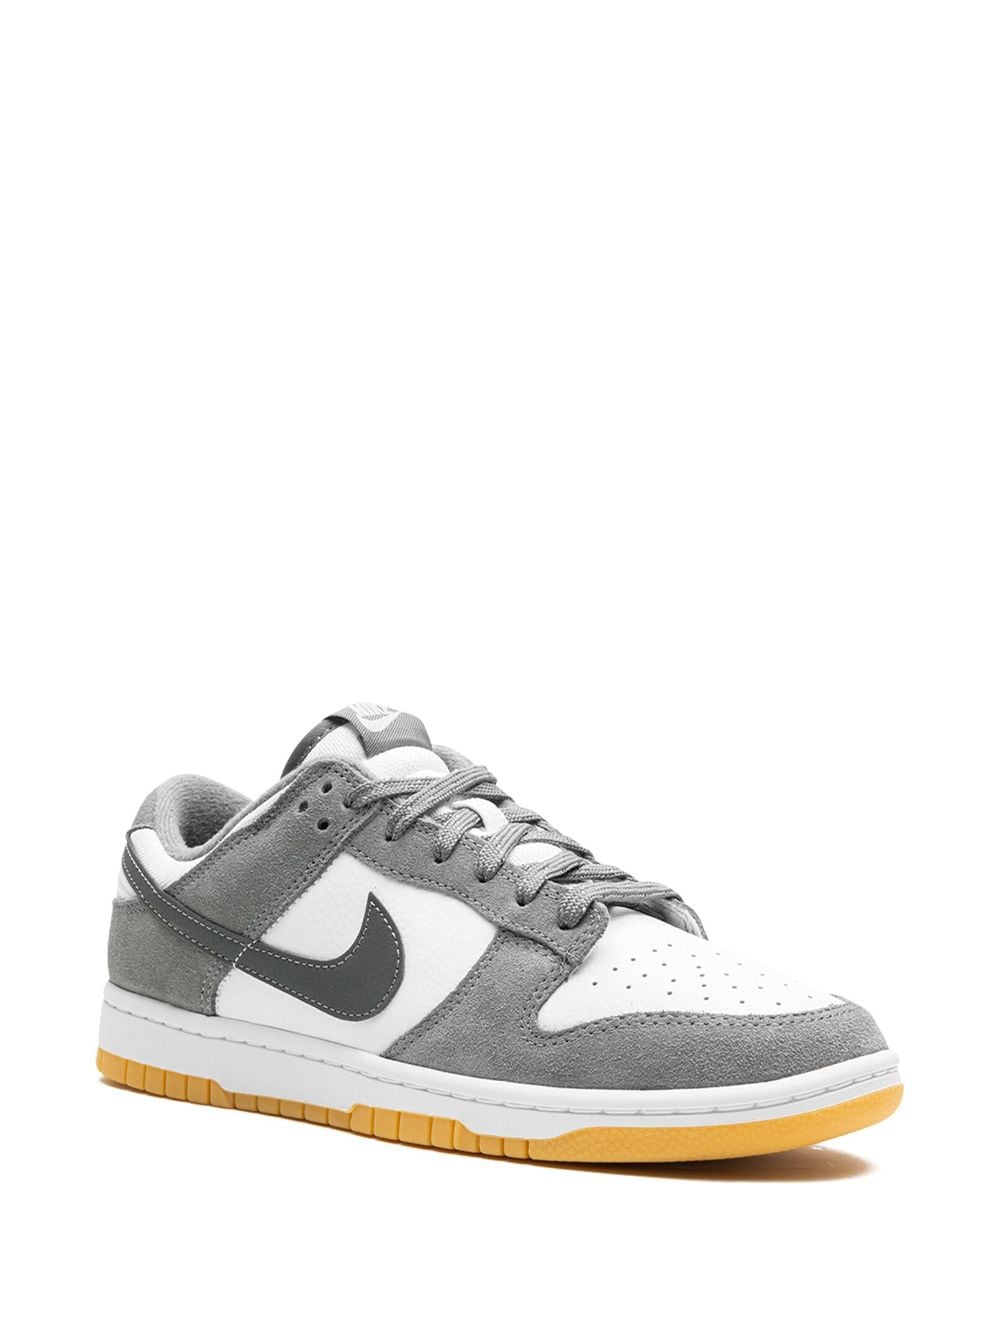 Image 2 of Nike "Dunk Low ""Smoke Grey"" sneakers"